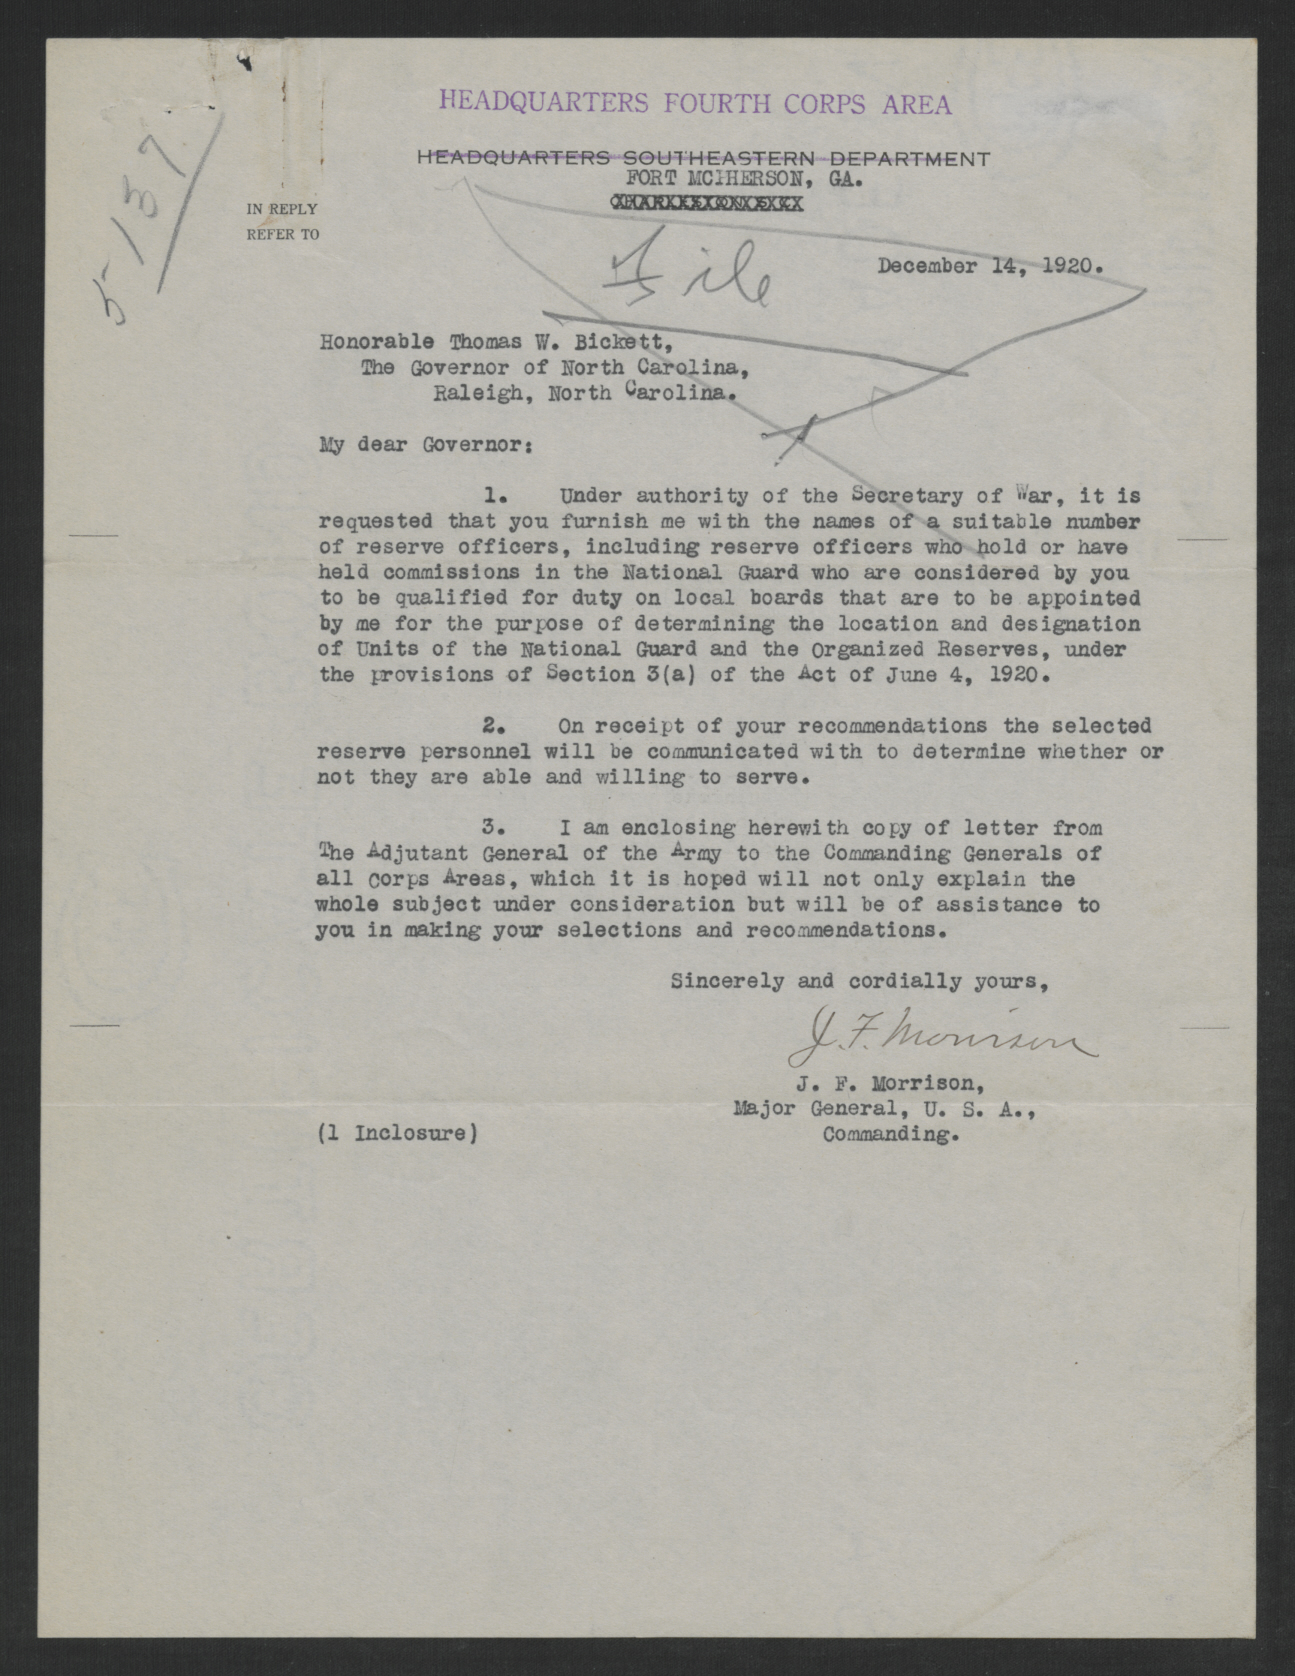 Letter from John F. Morrison to Thomas W. Bickett, December 14, 1920